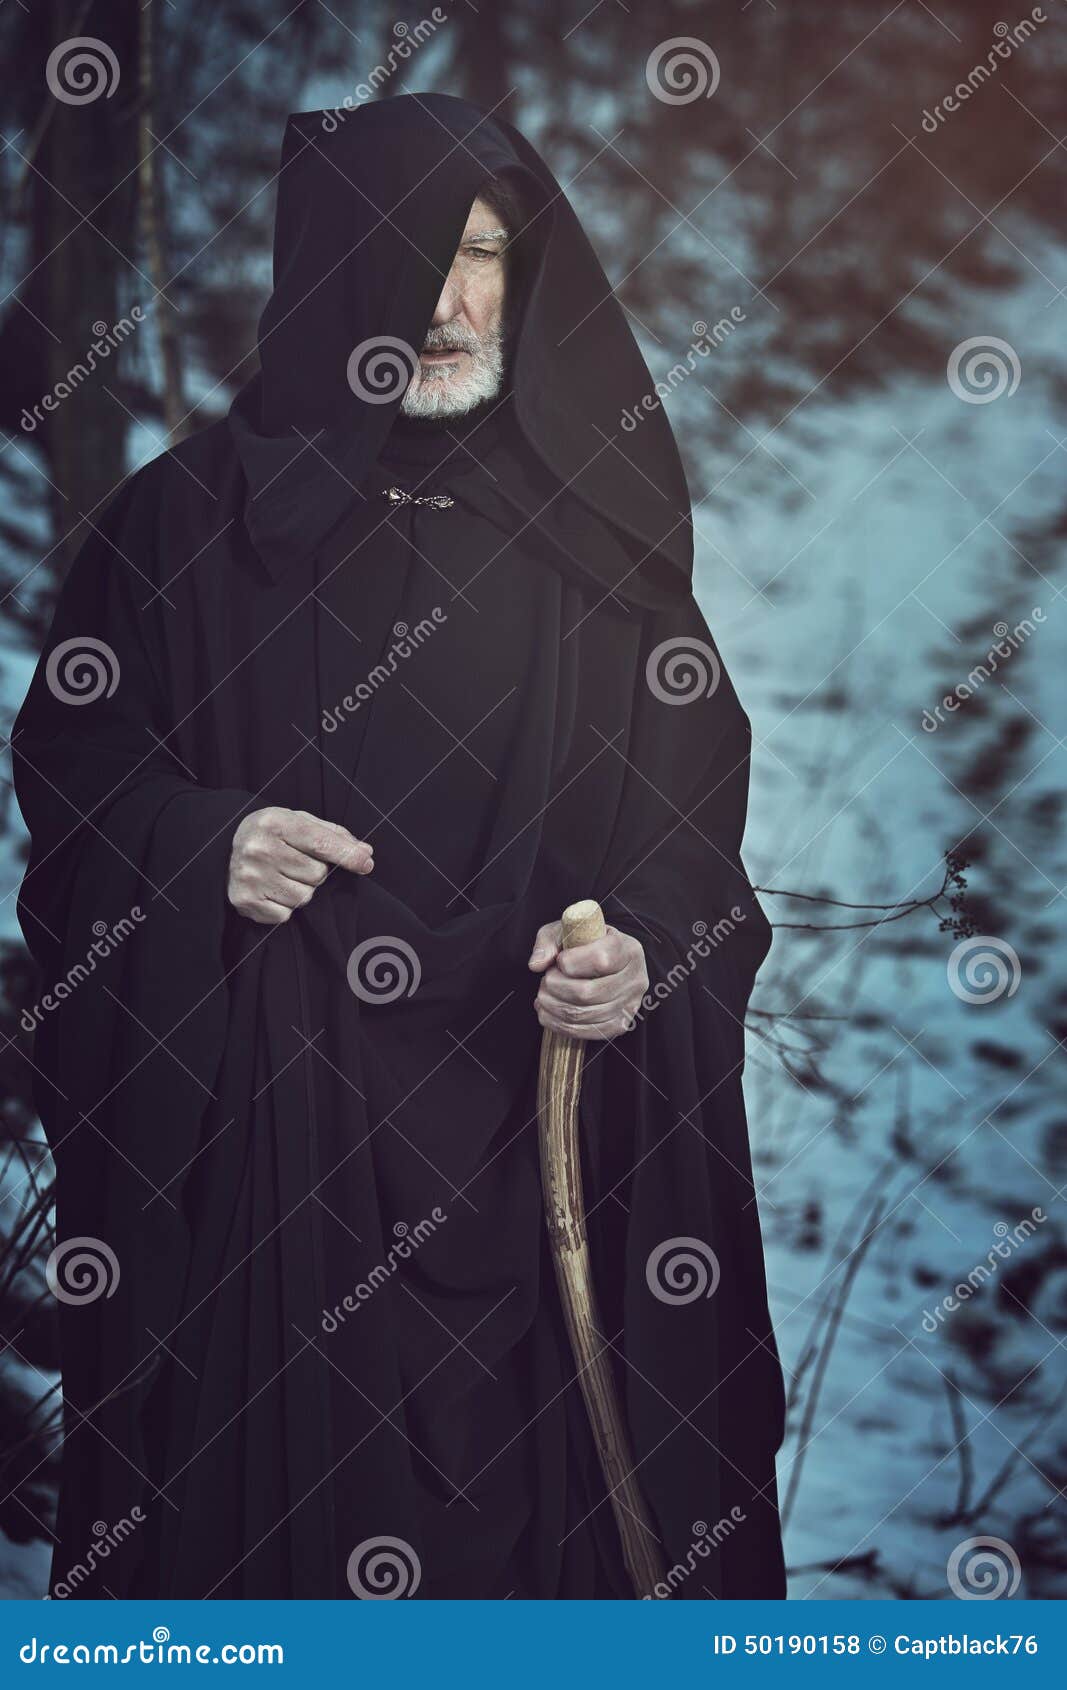 old white beard pilgrim in dark forest with snow